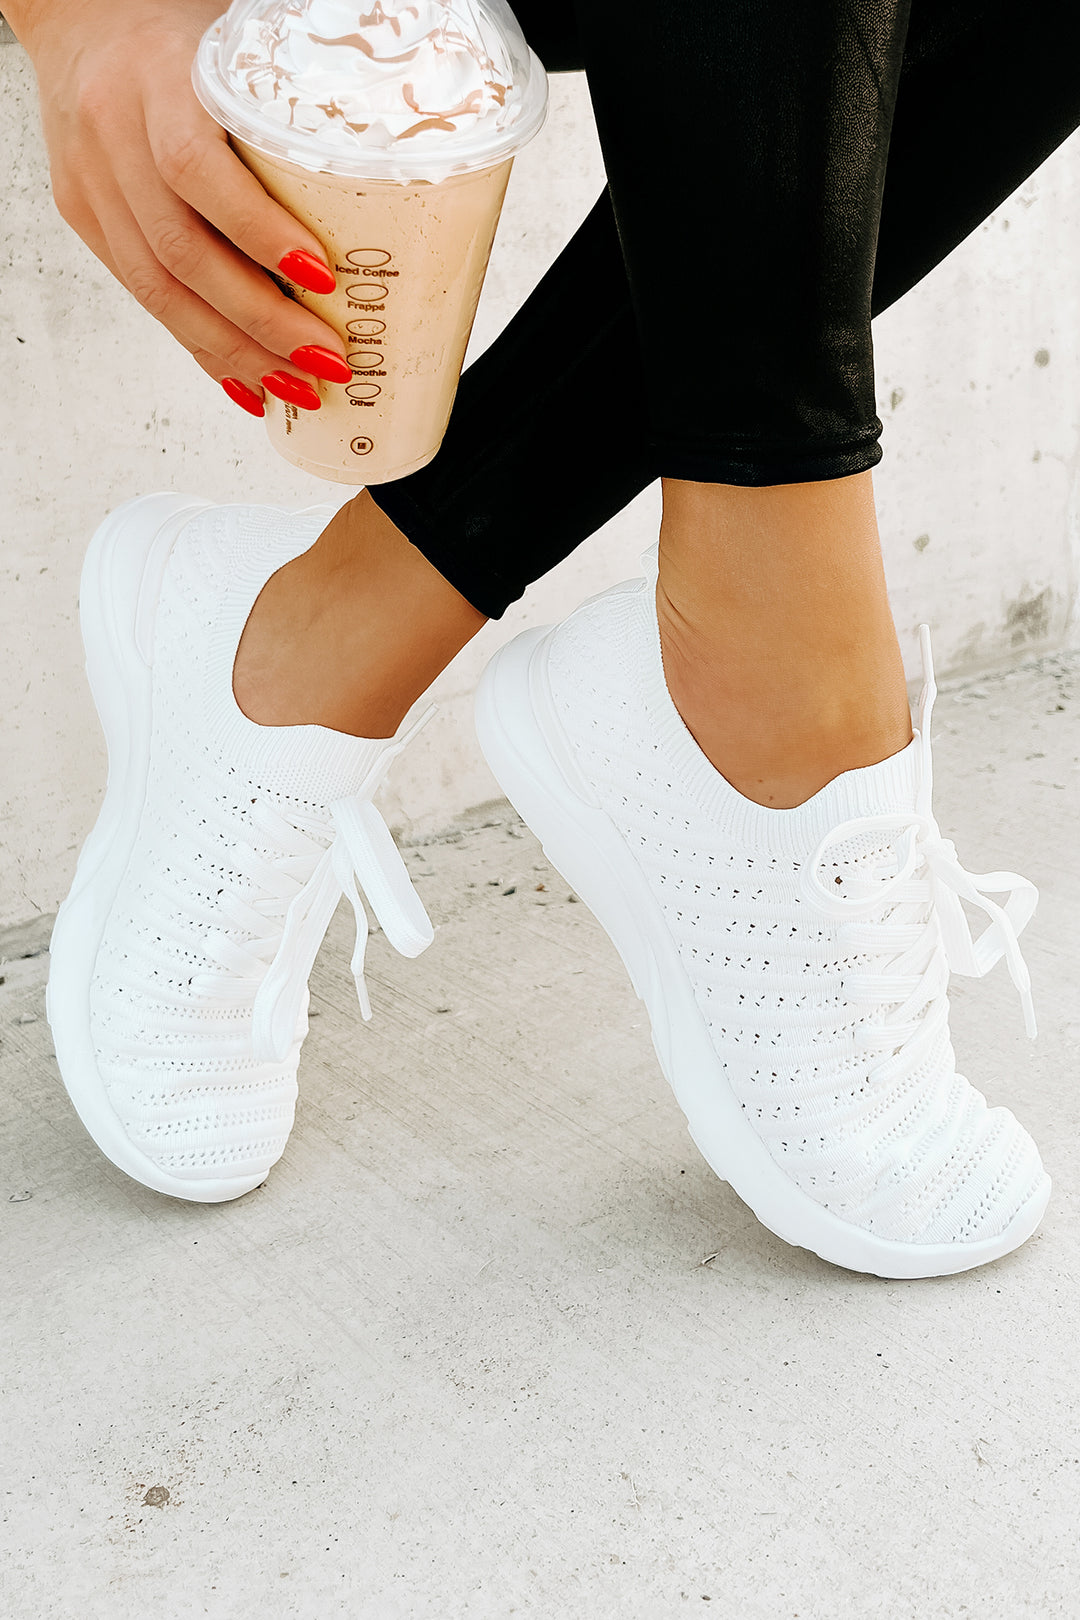 I'd Rather Walk Knit Sneaker (White) - NanaMacs